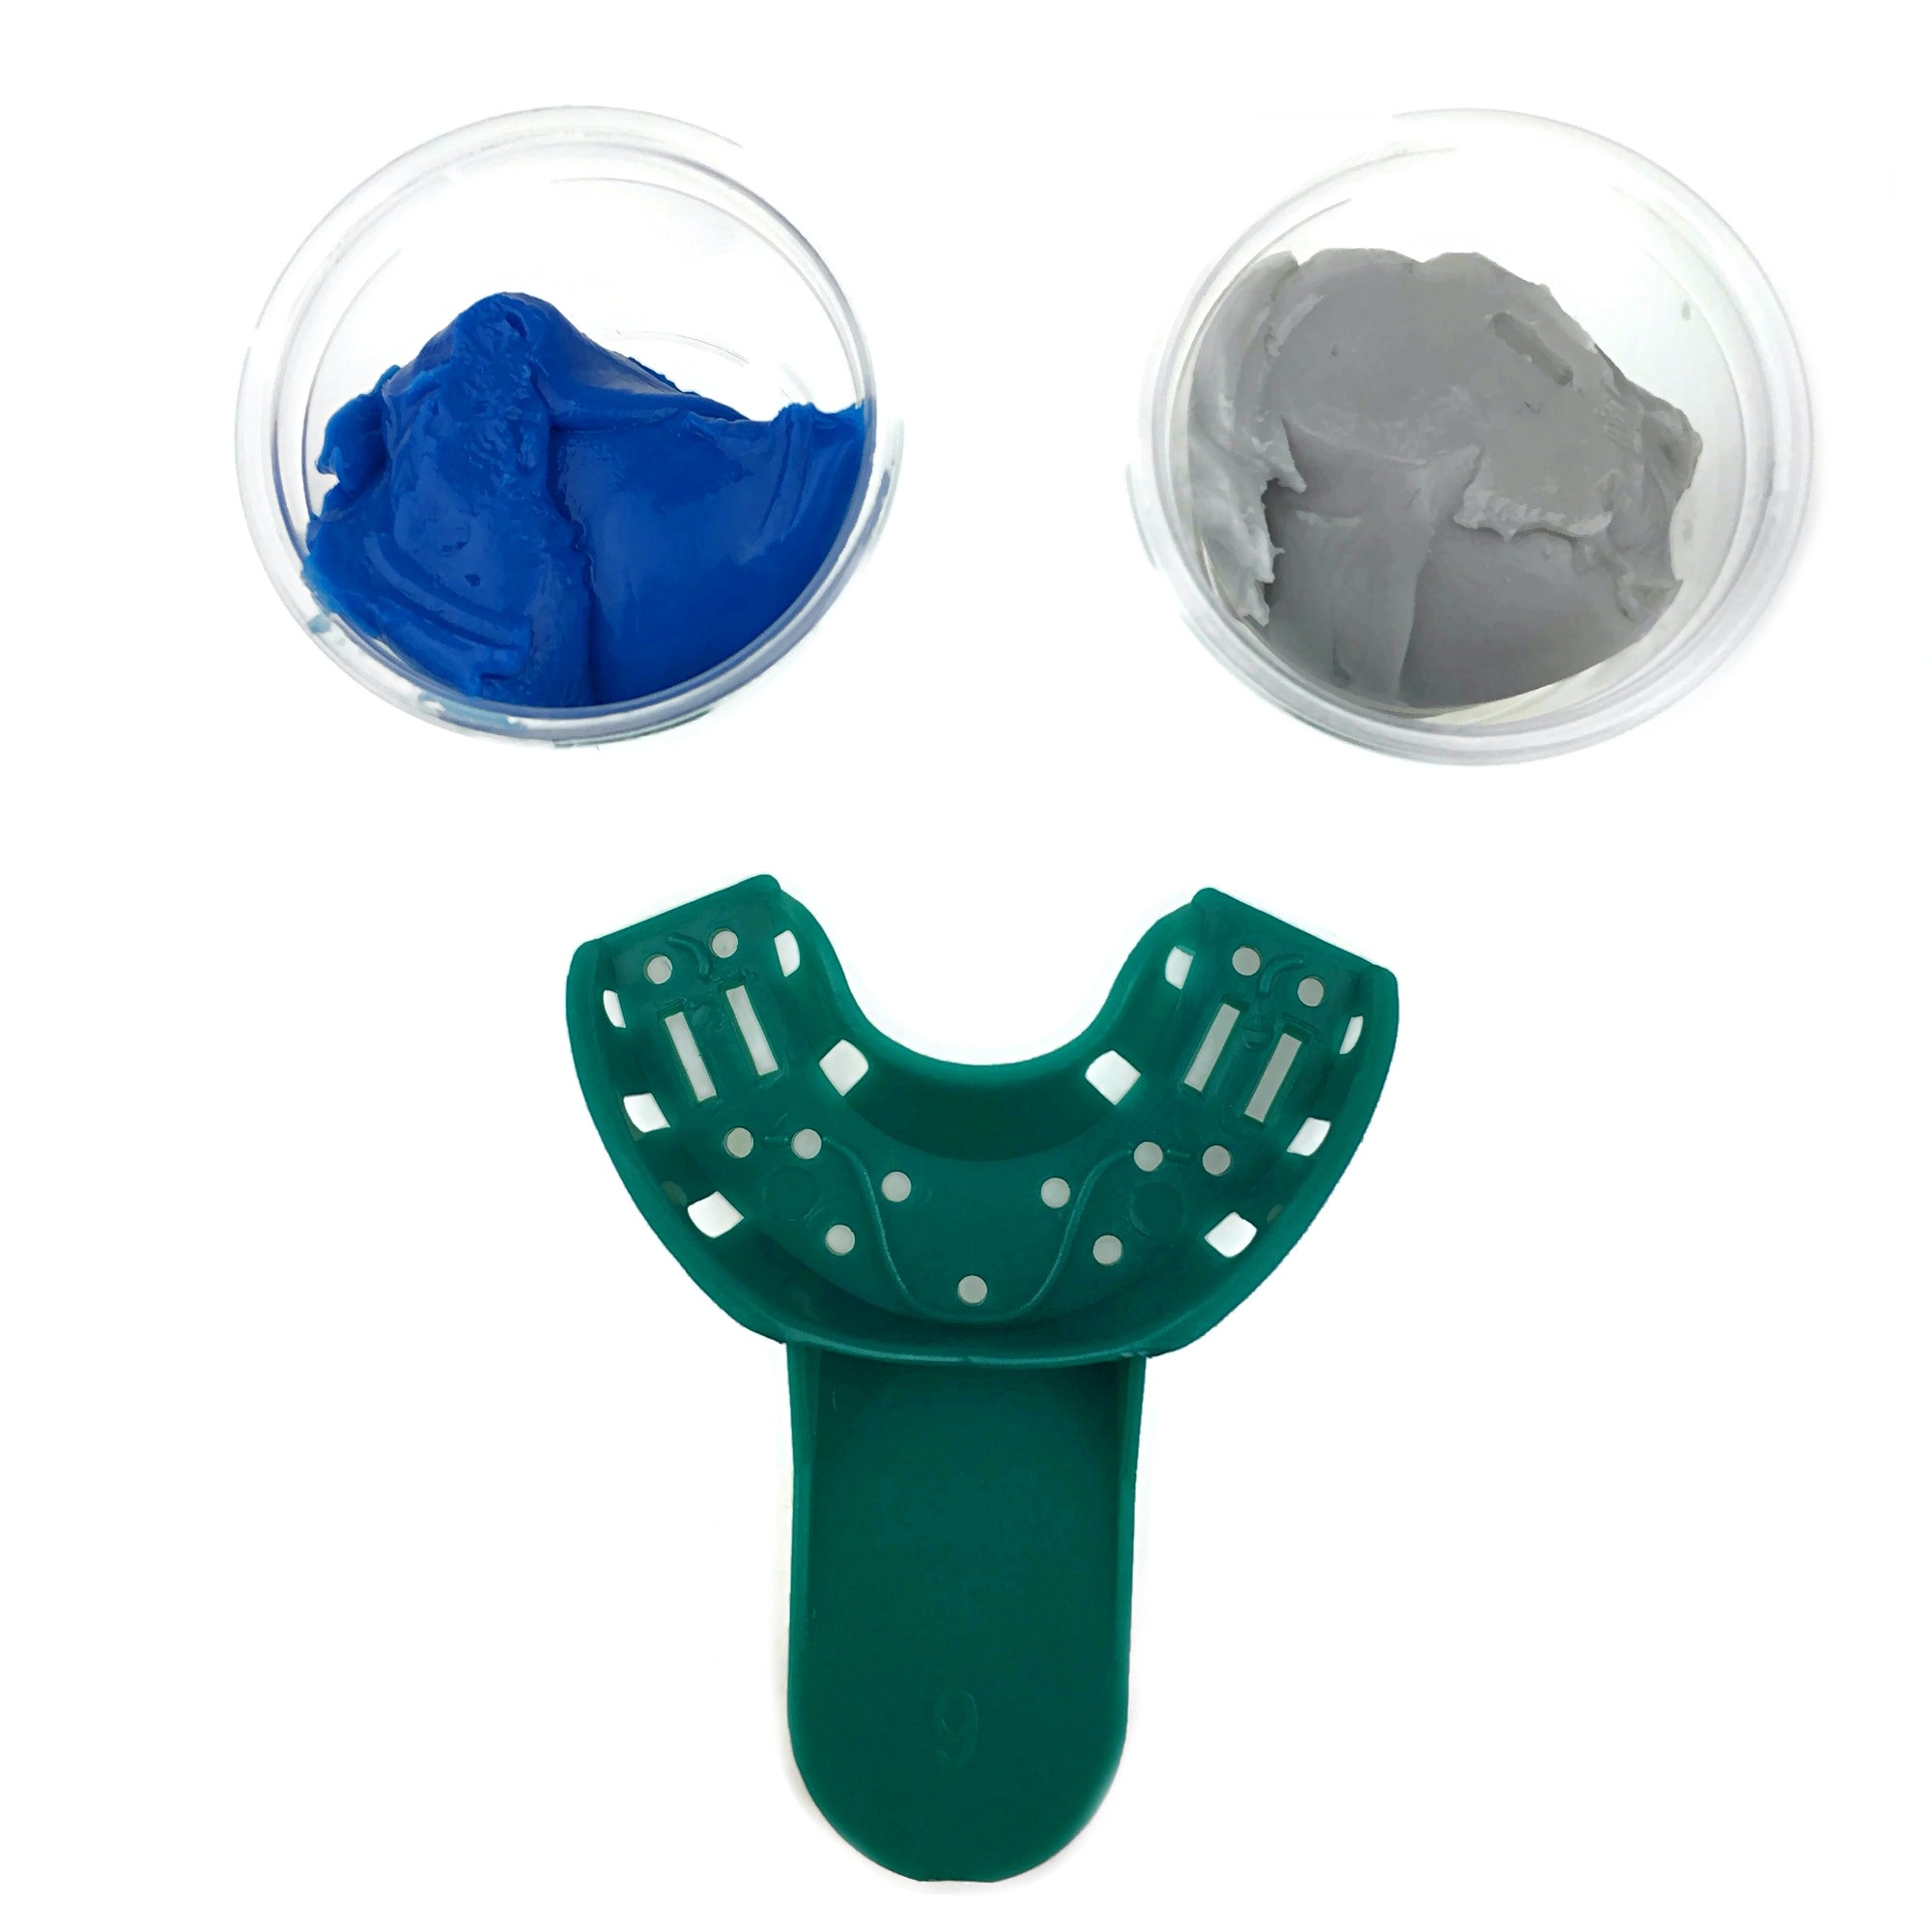 Dental Impression Kit - 168 Gm Putty Silicone - 4 Dental Trays